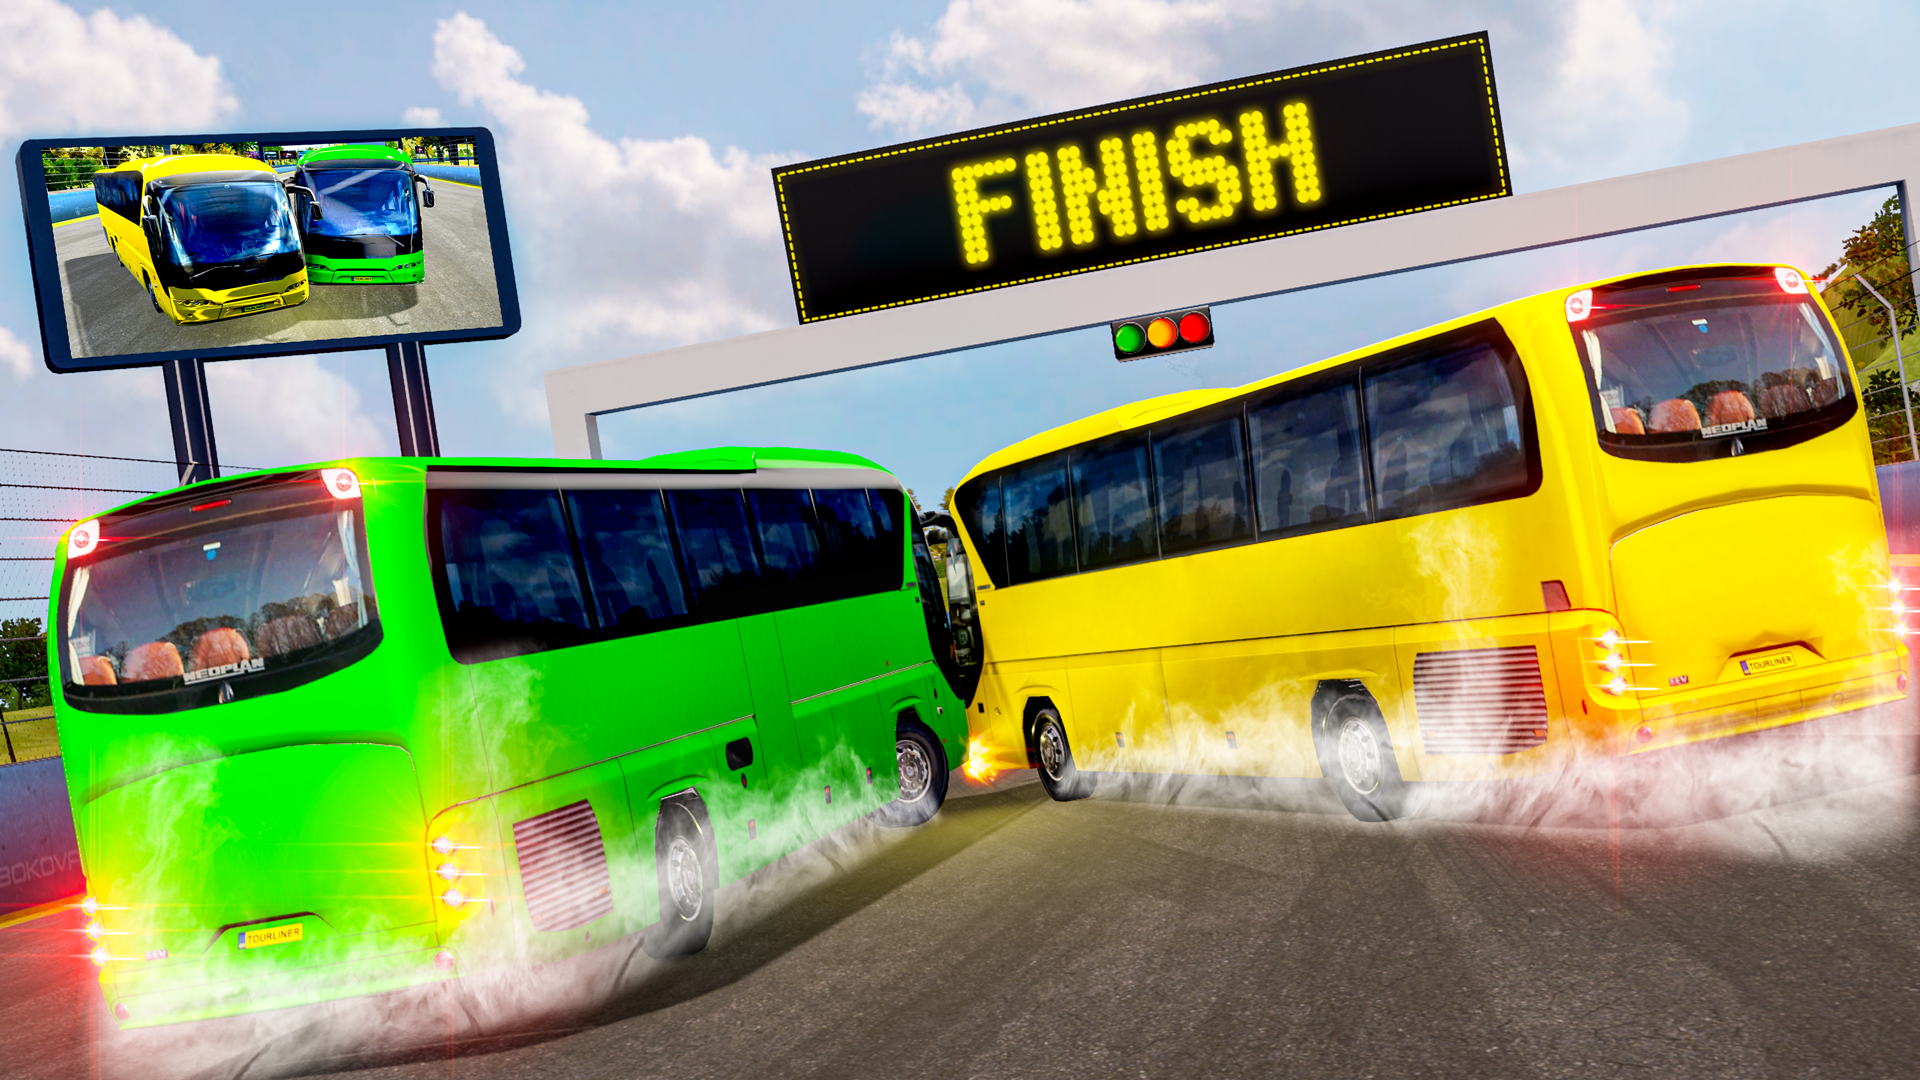 Play Coach Bus Games: Bus Simulator Online